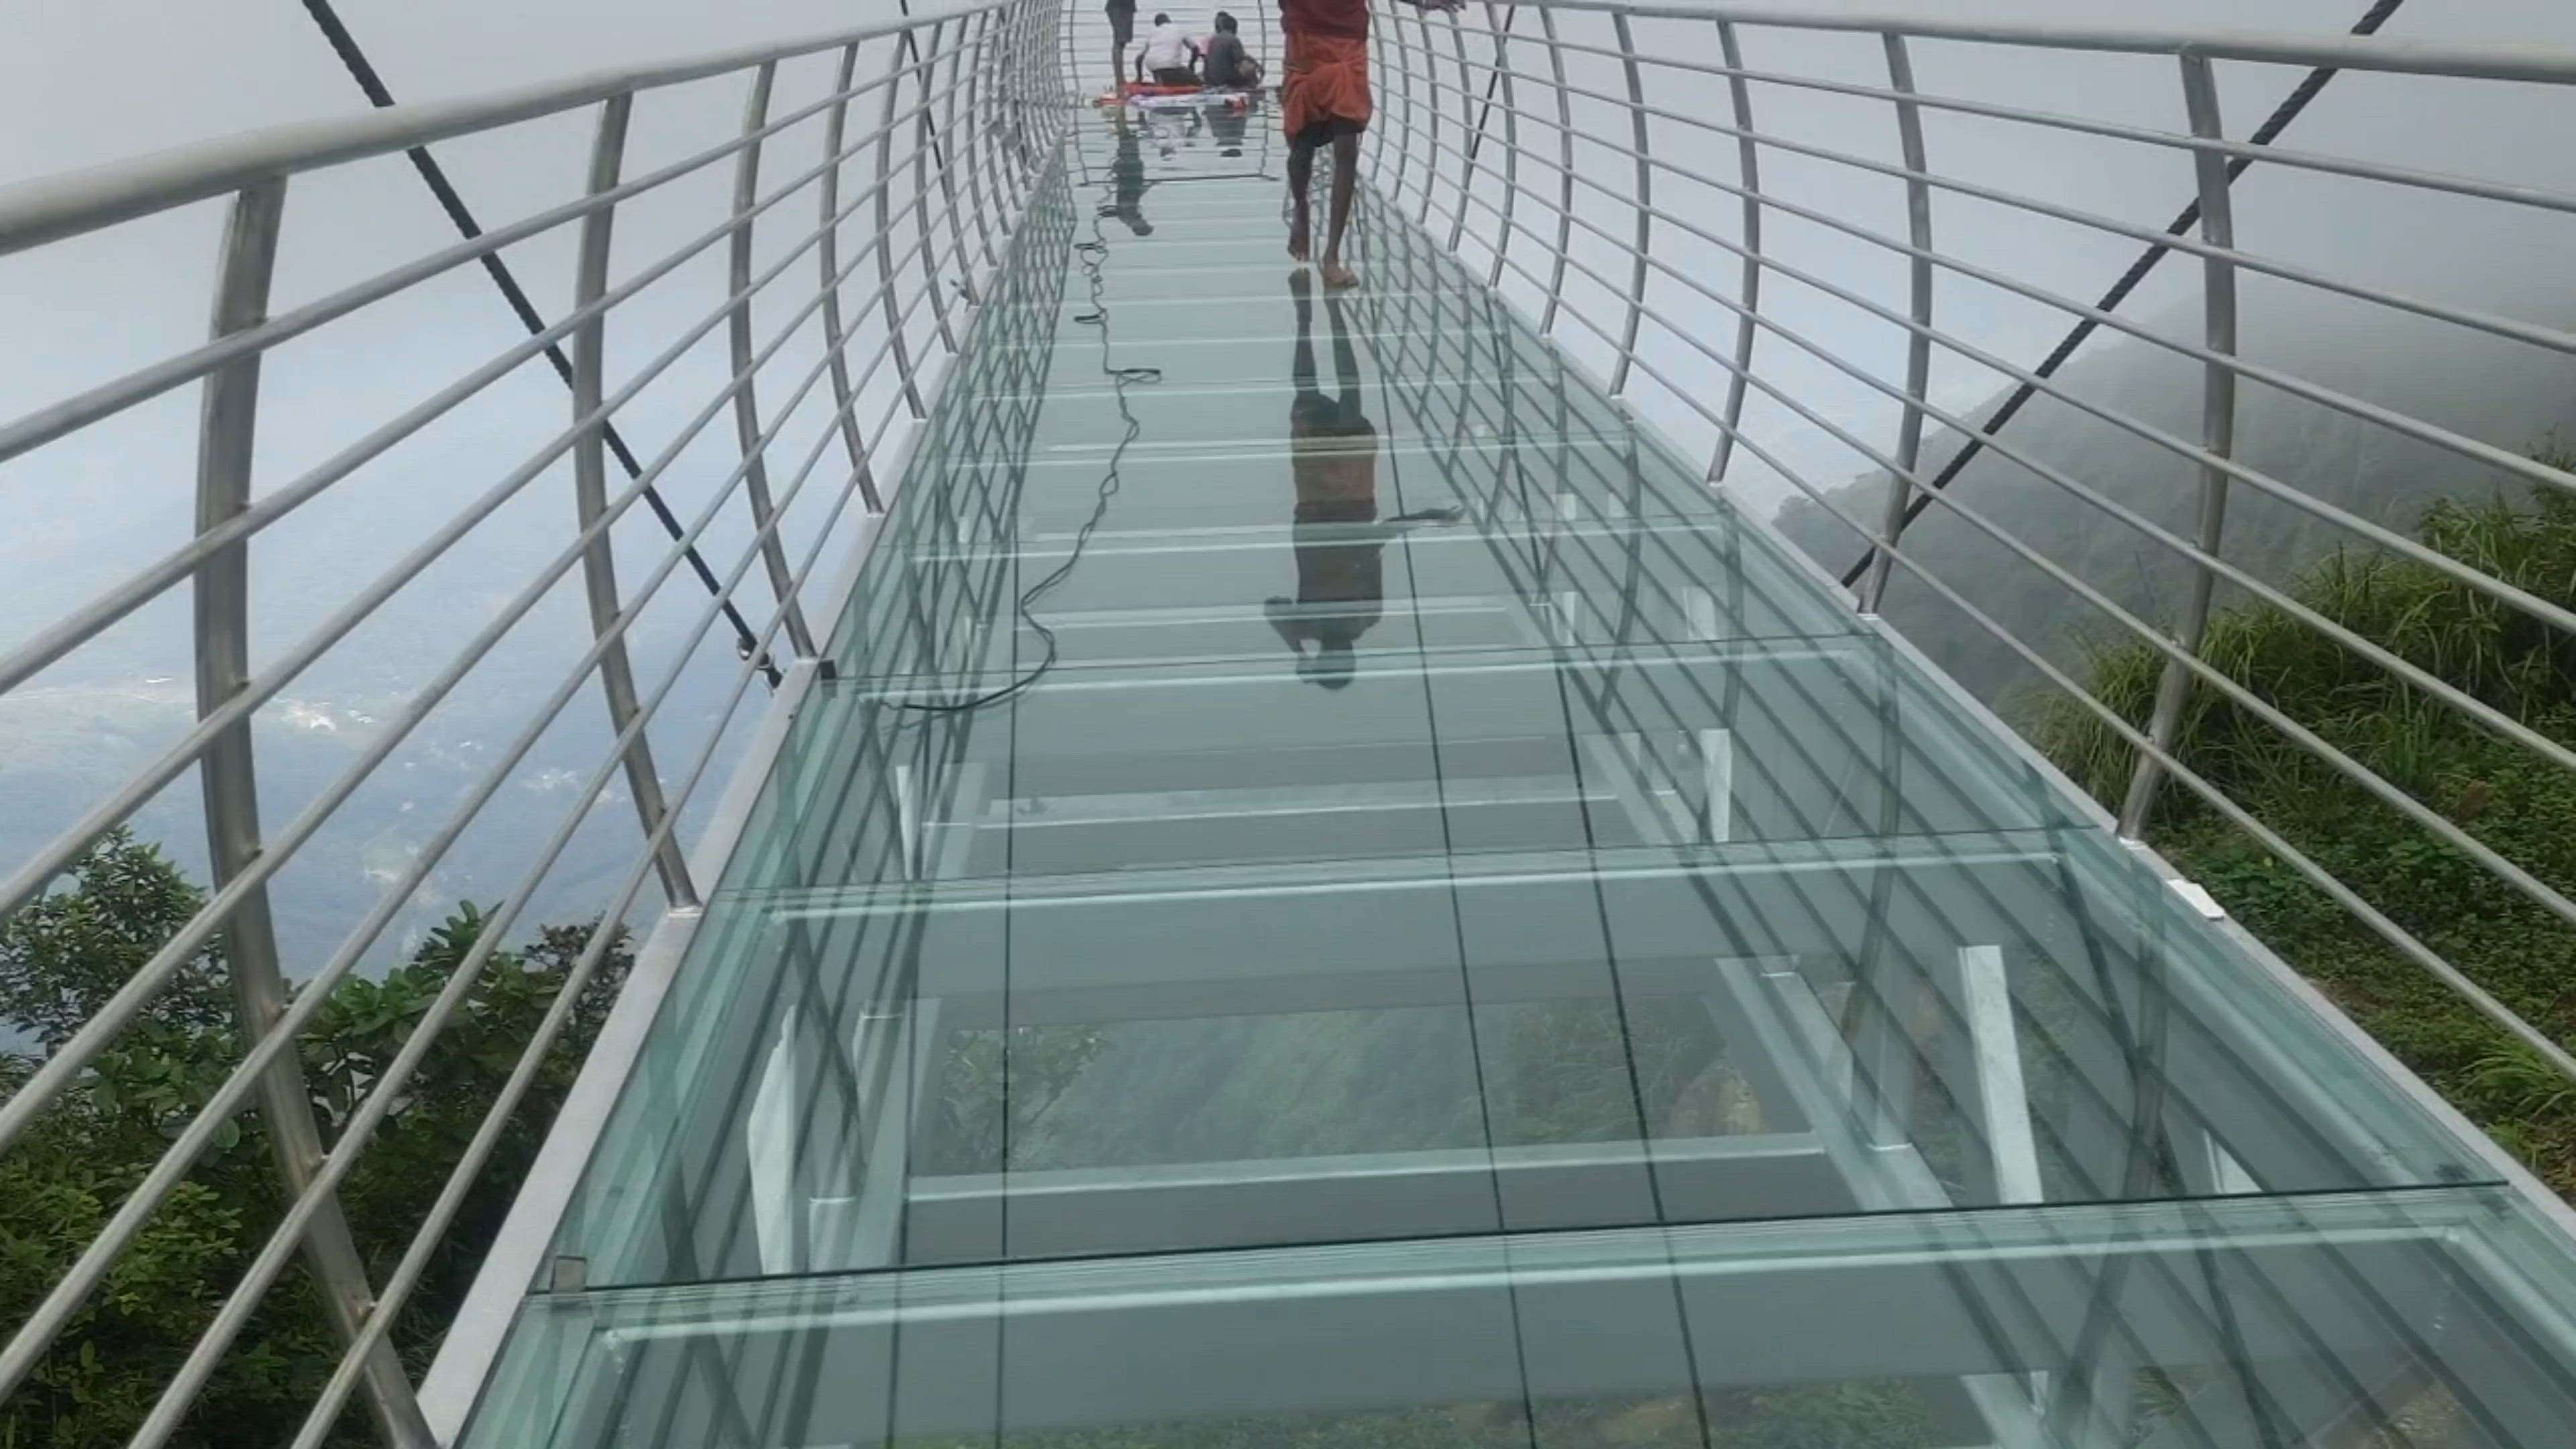 #glassbridge
#vagamon 
#vagamonglassbridge
#cantileverglassbridge
#fabglassworks
#glassshop